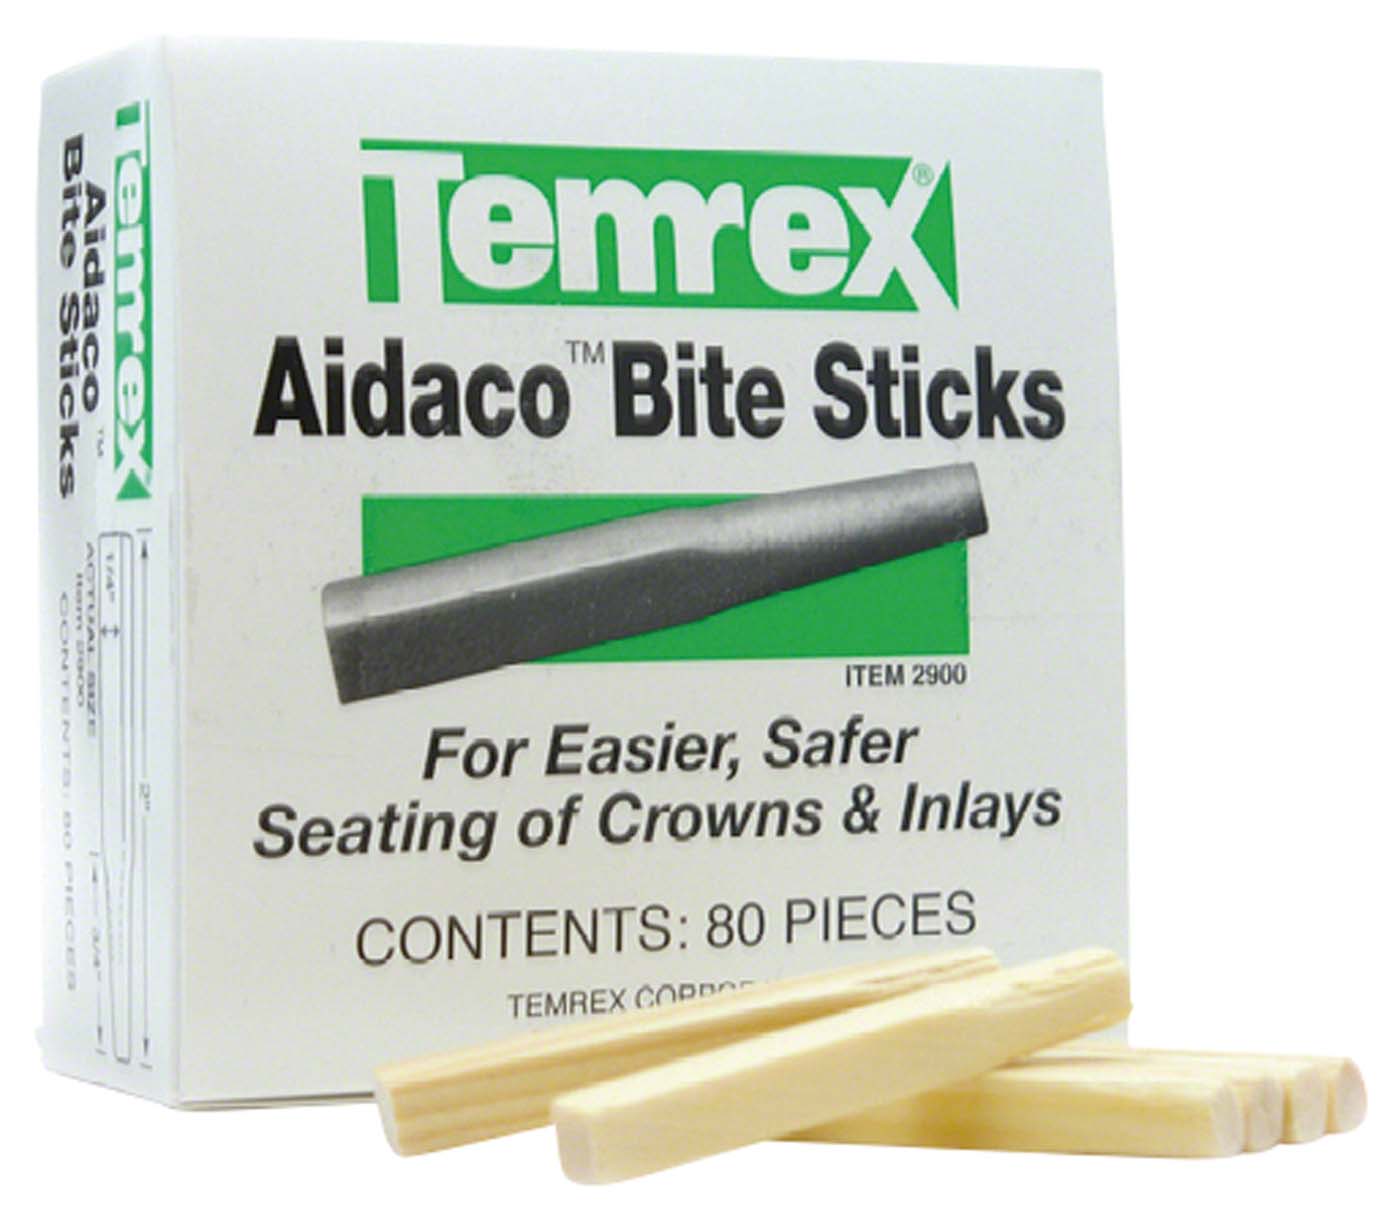 Aidaco™ Bite Sticks American Dental